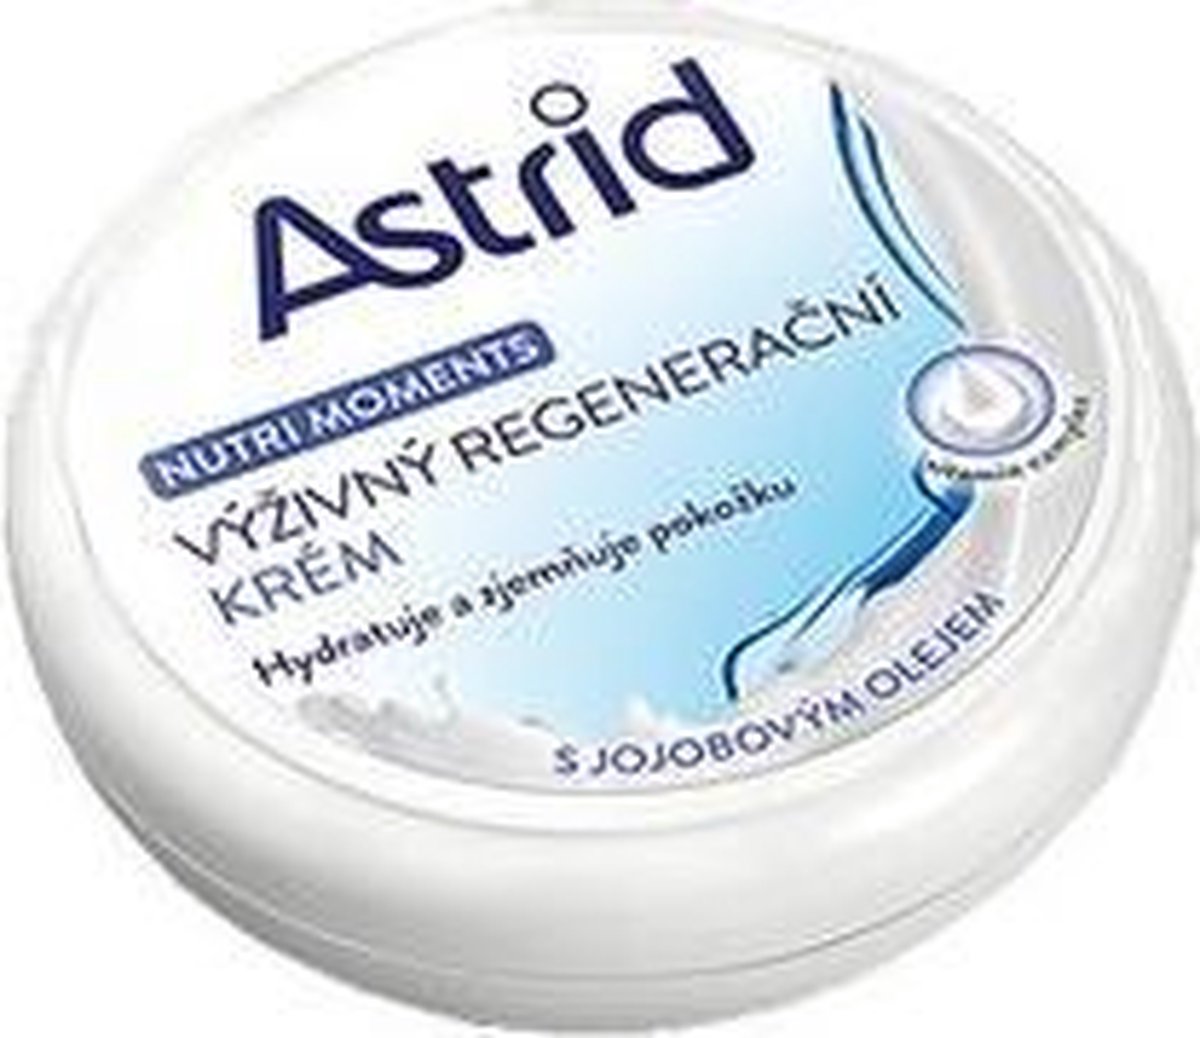 Astrid - Nutri Moments Nourishing Regenerating Cream - 150ml